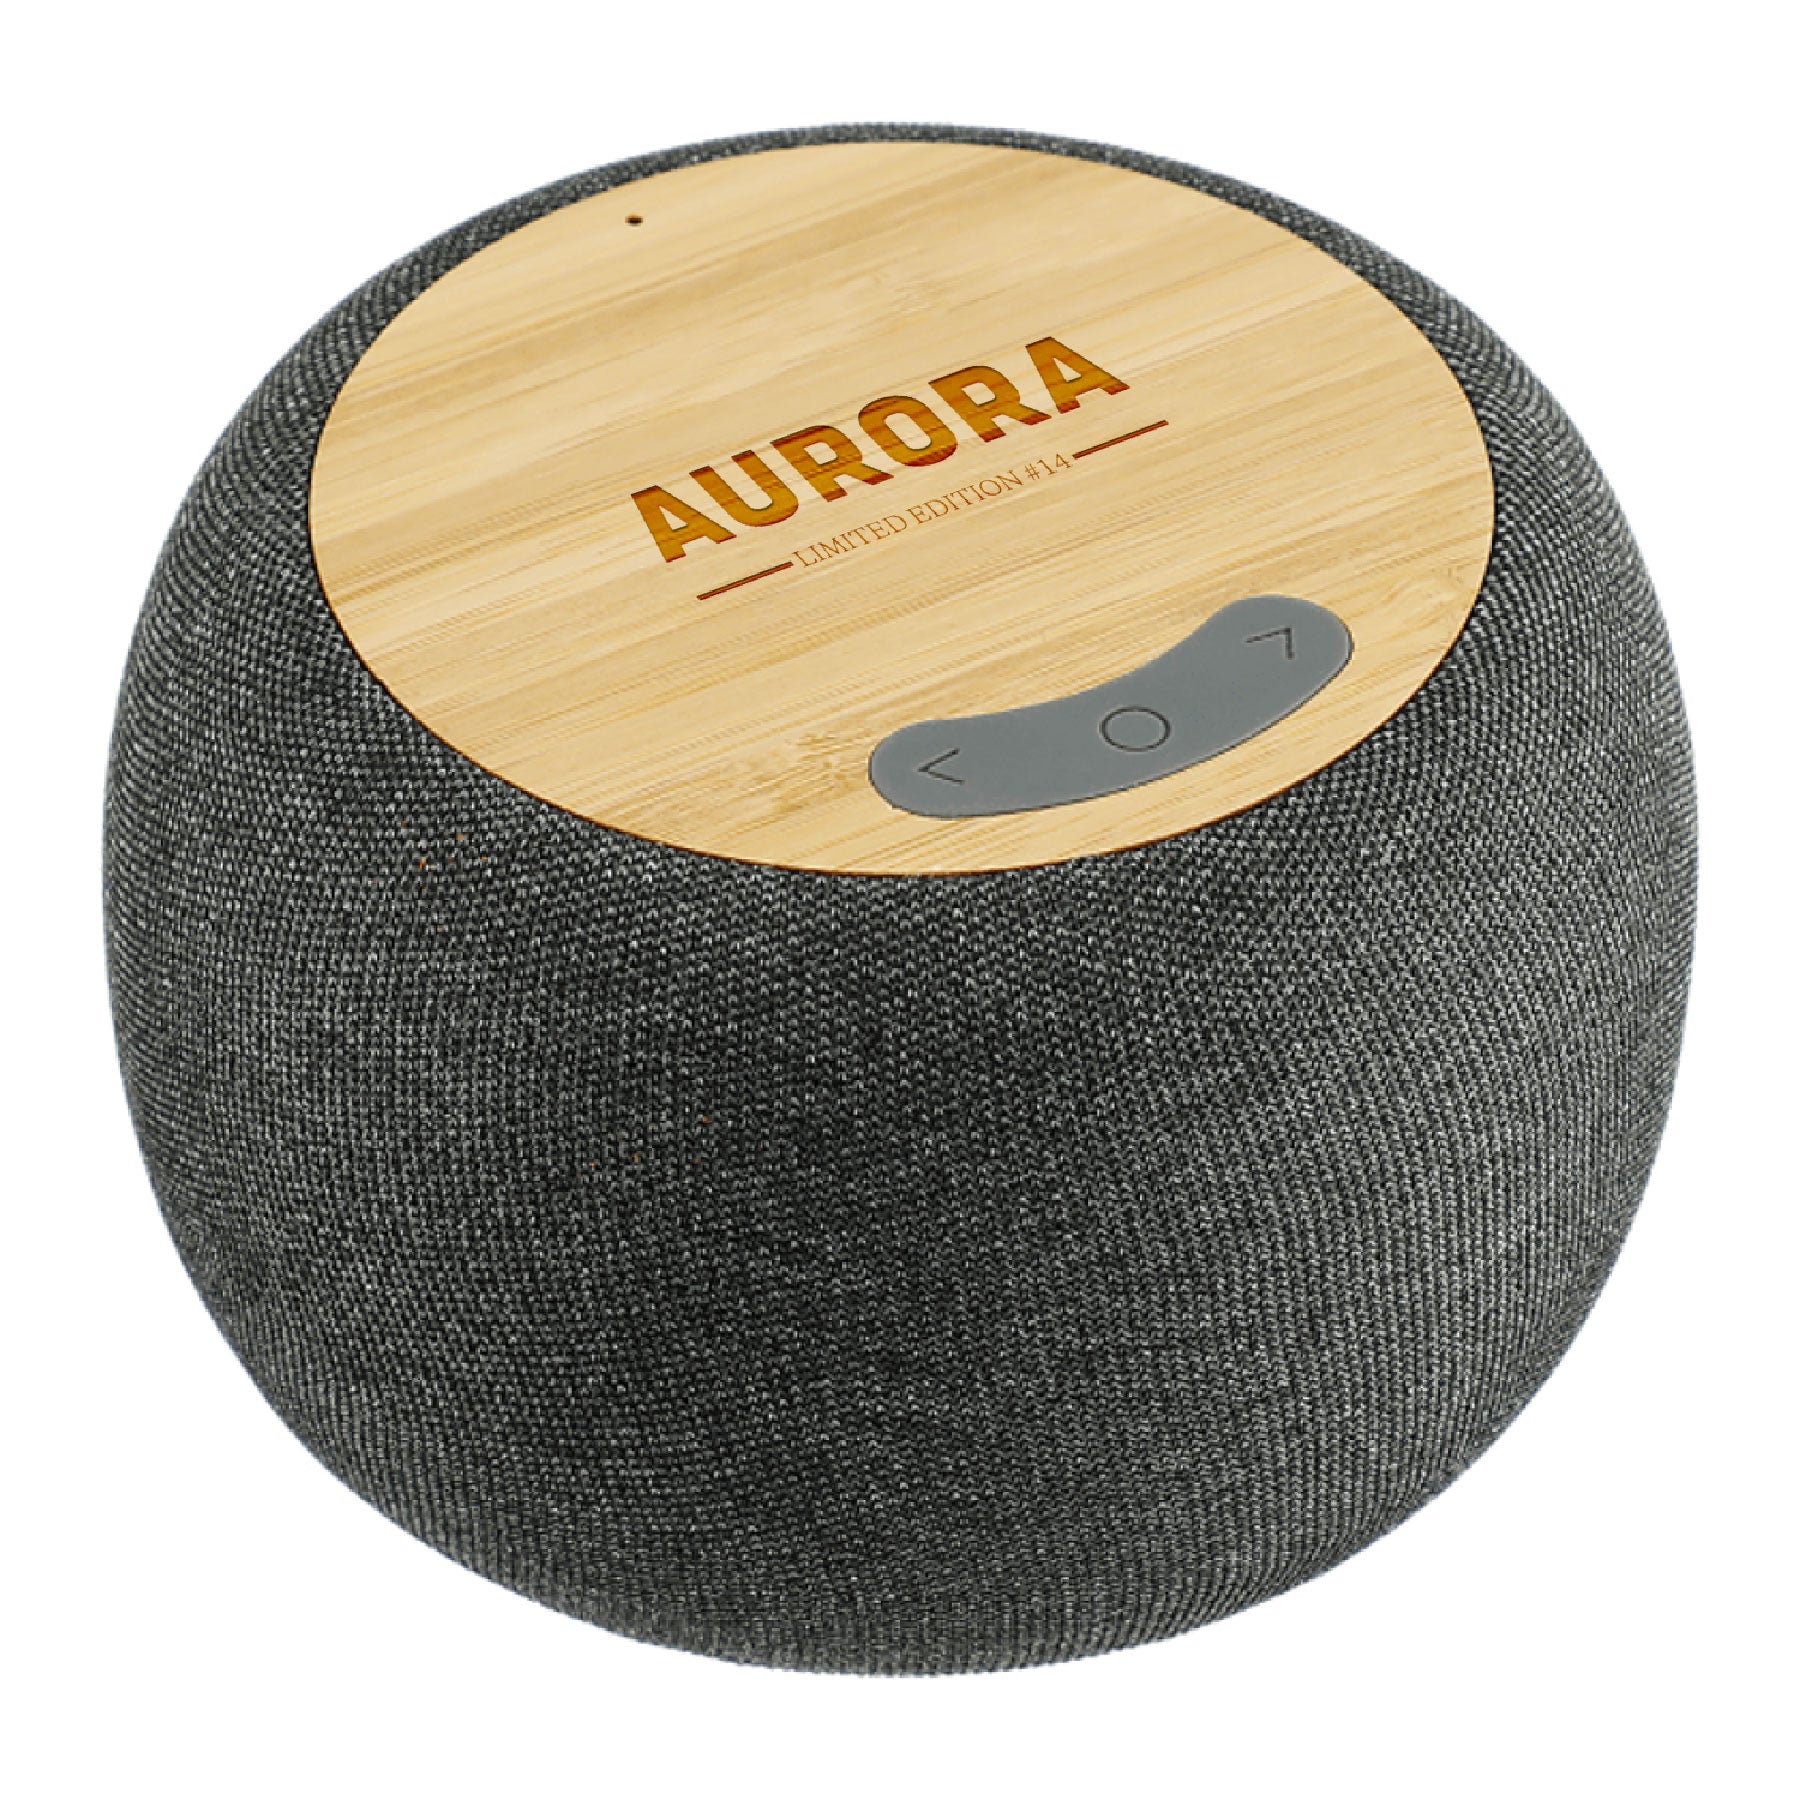 Aurora Speaker & Charger | Collector Item #14 - $0